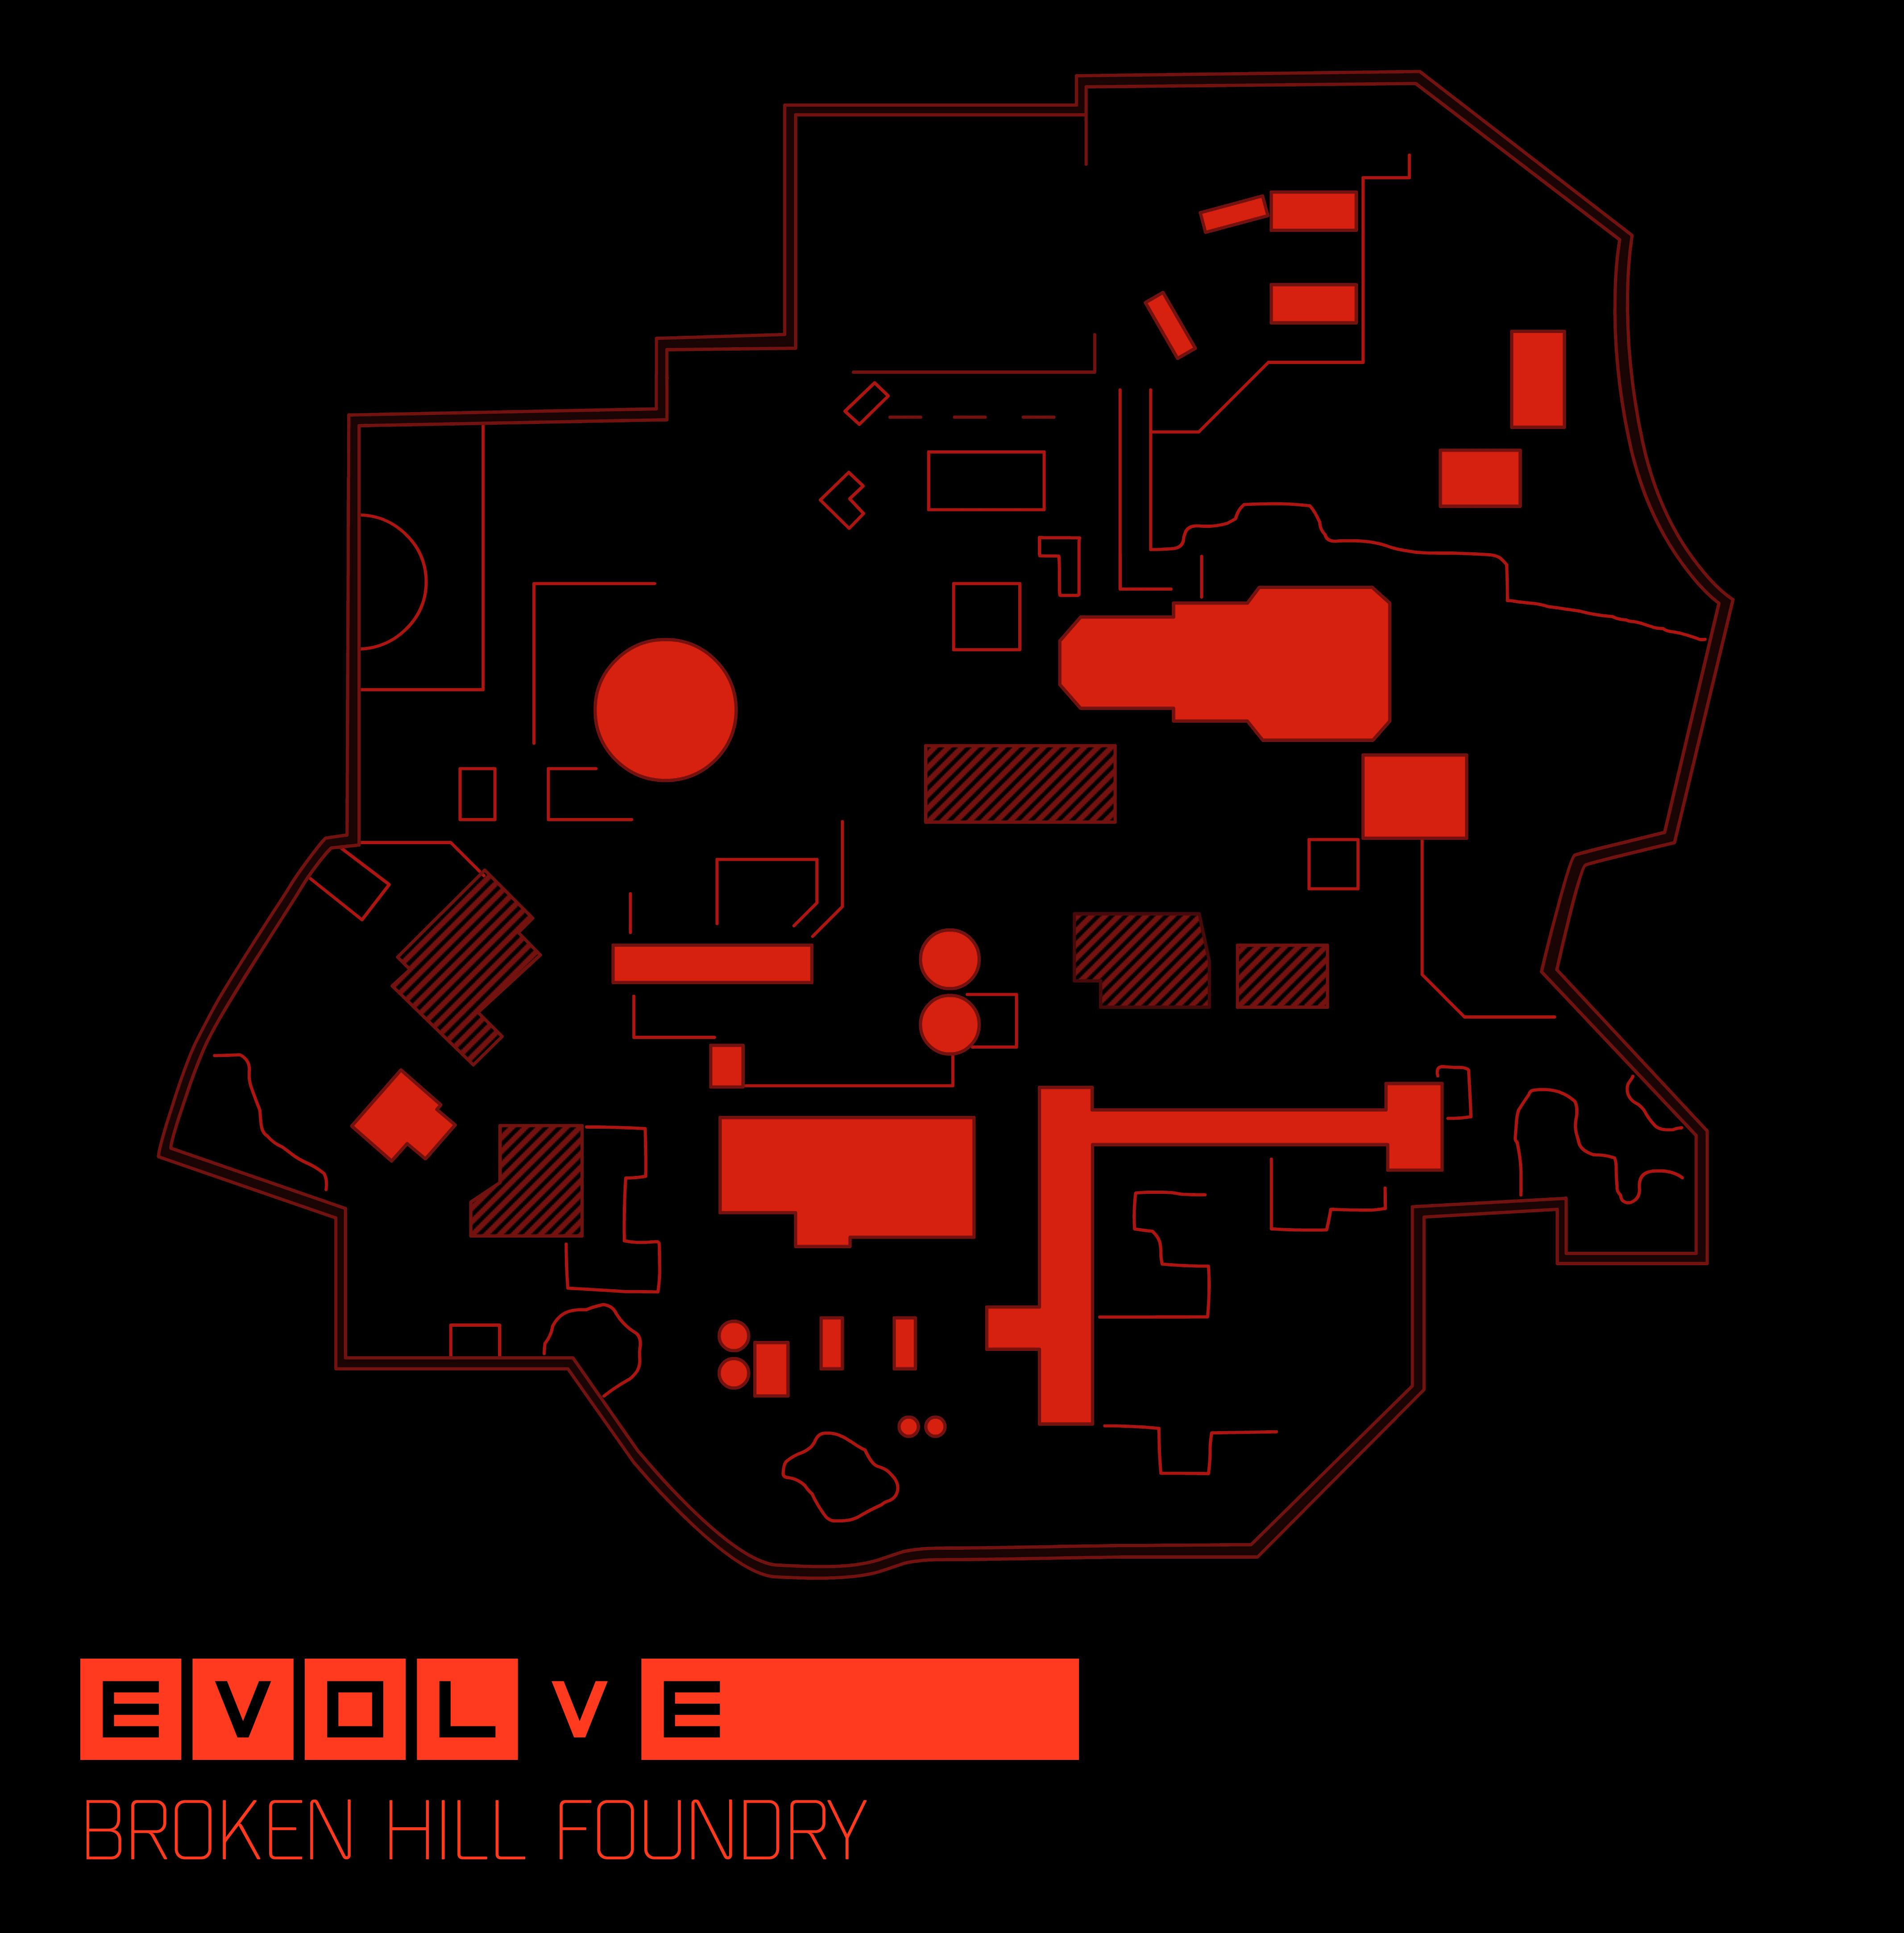 Evolve New Maps #4